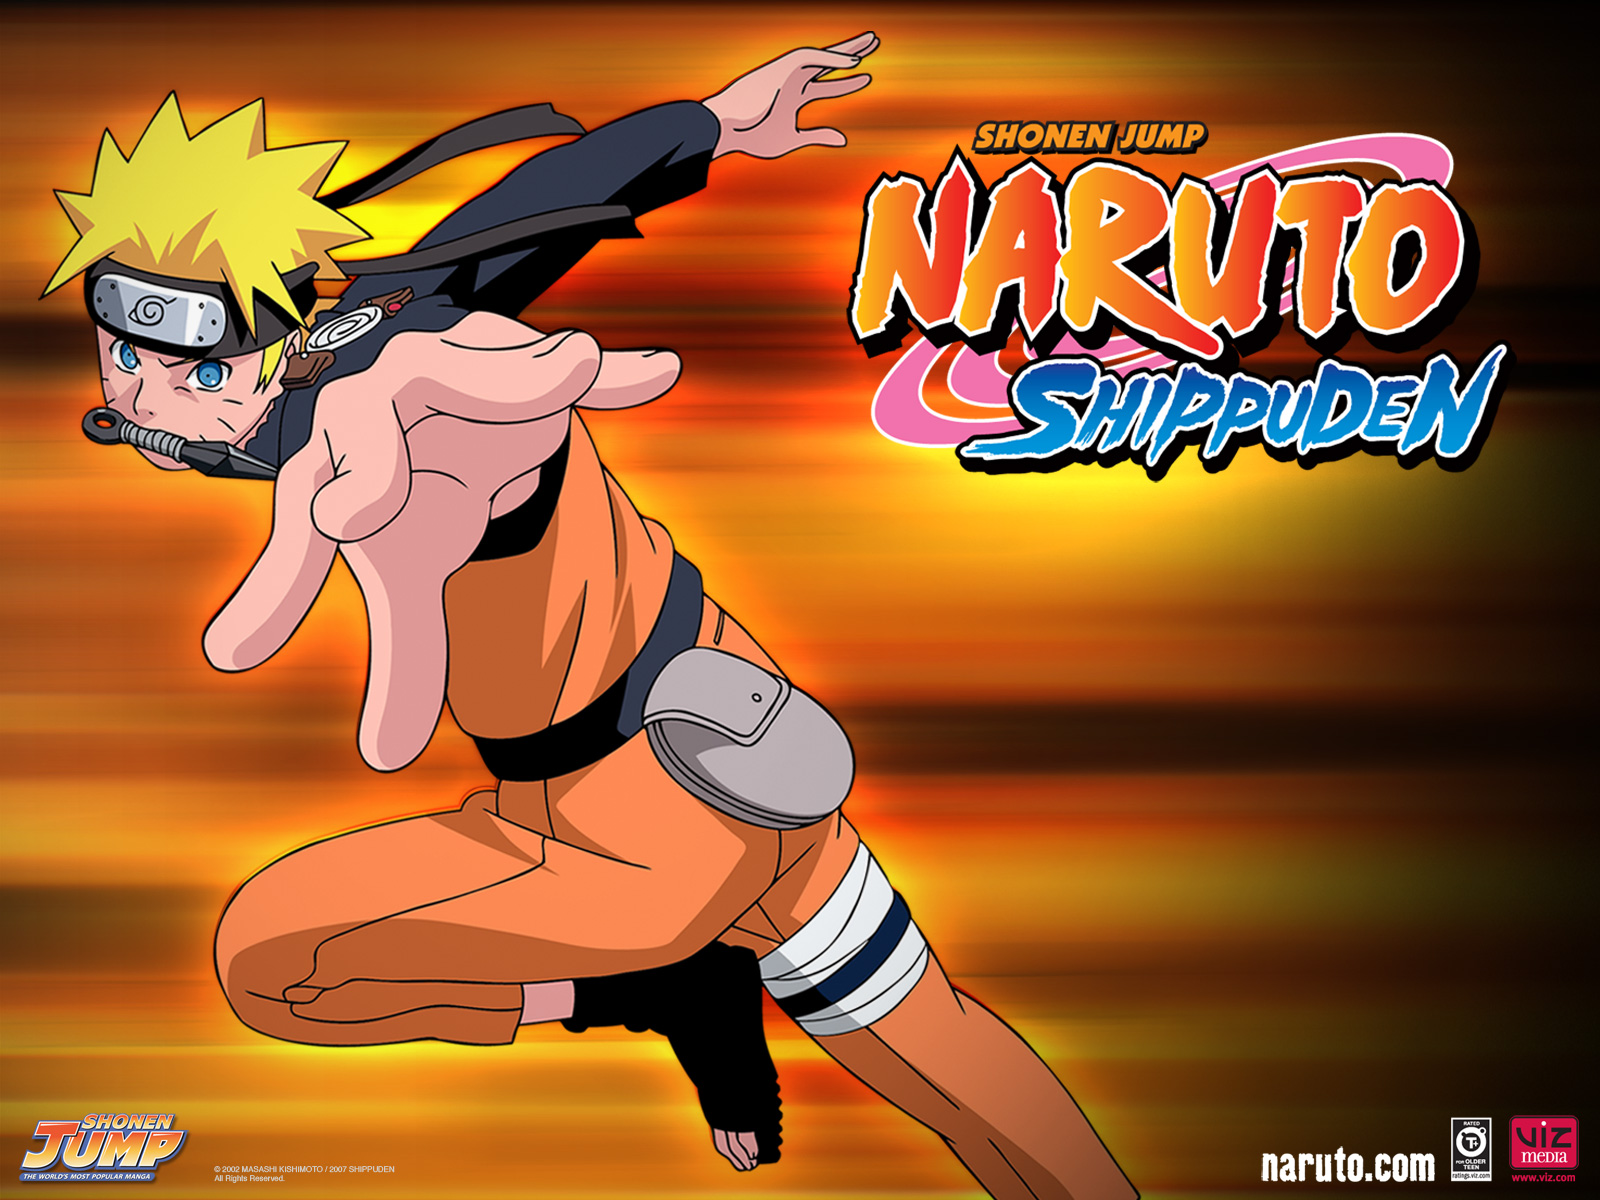 Best Site To Download Naruto Episodes